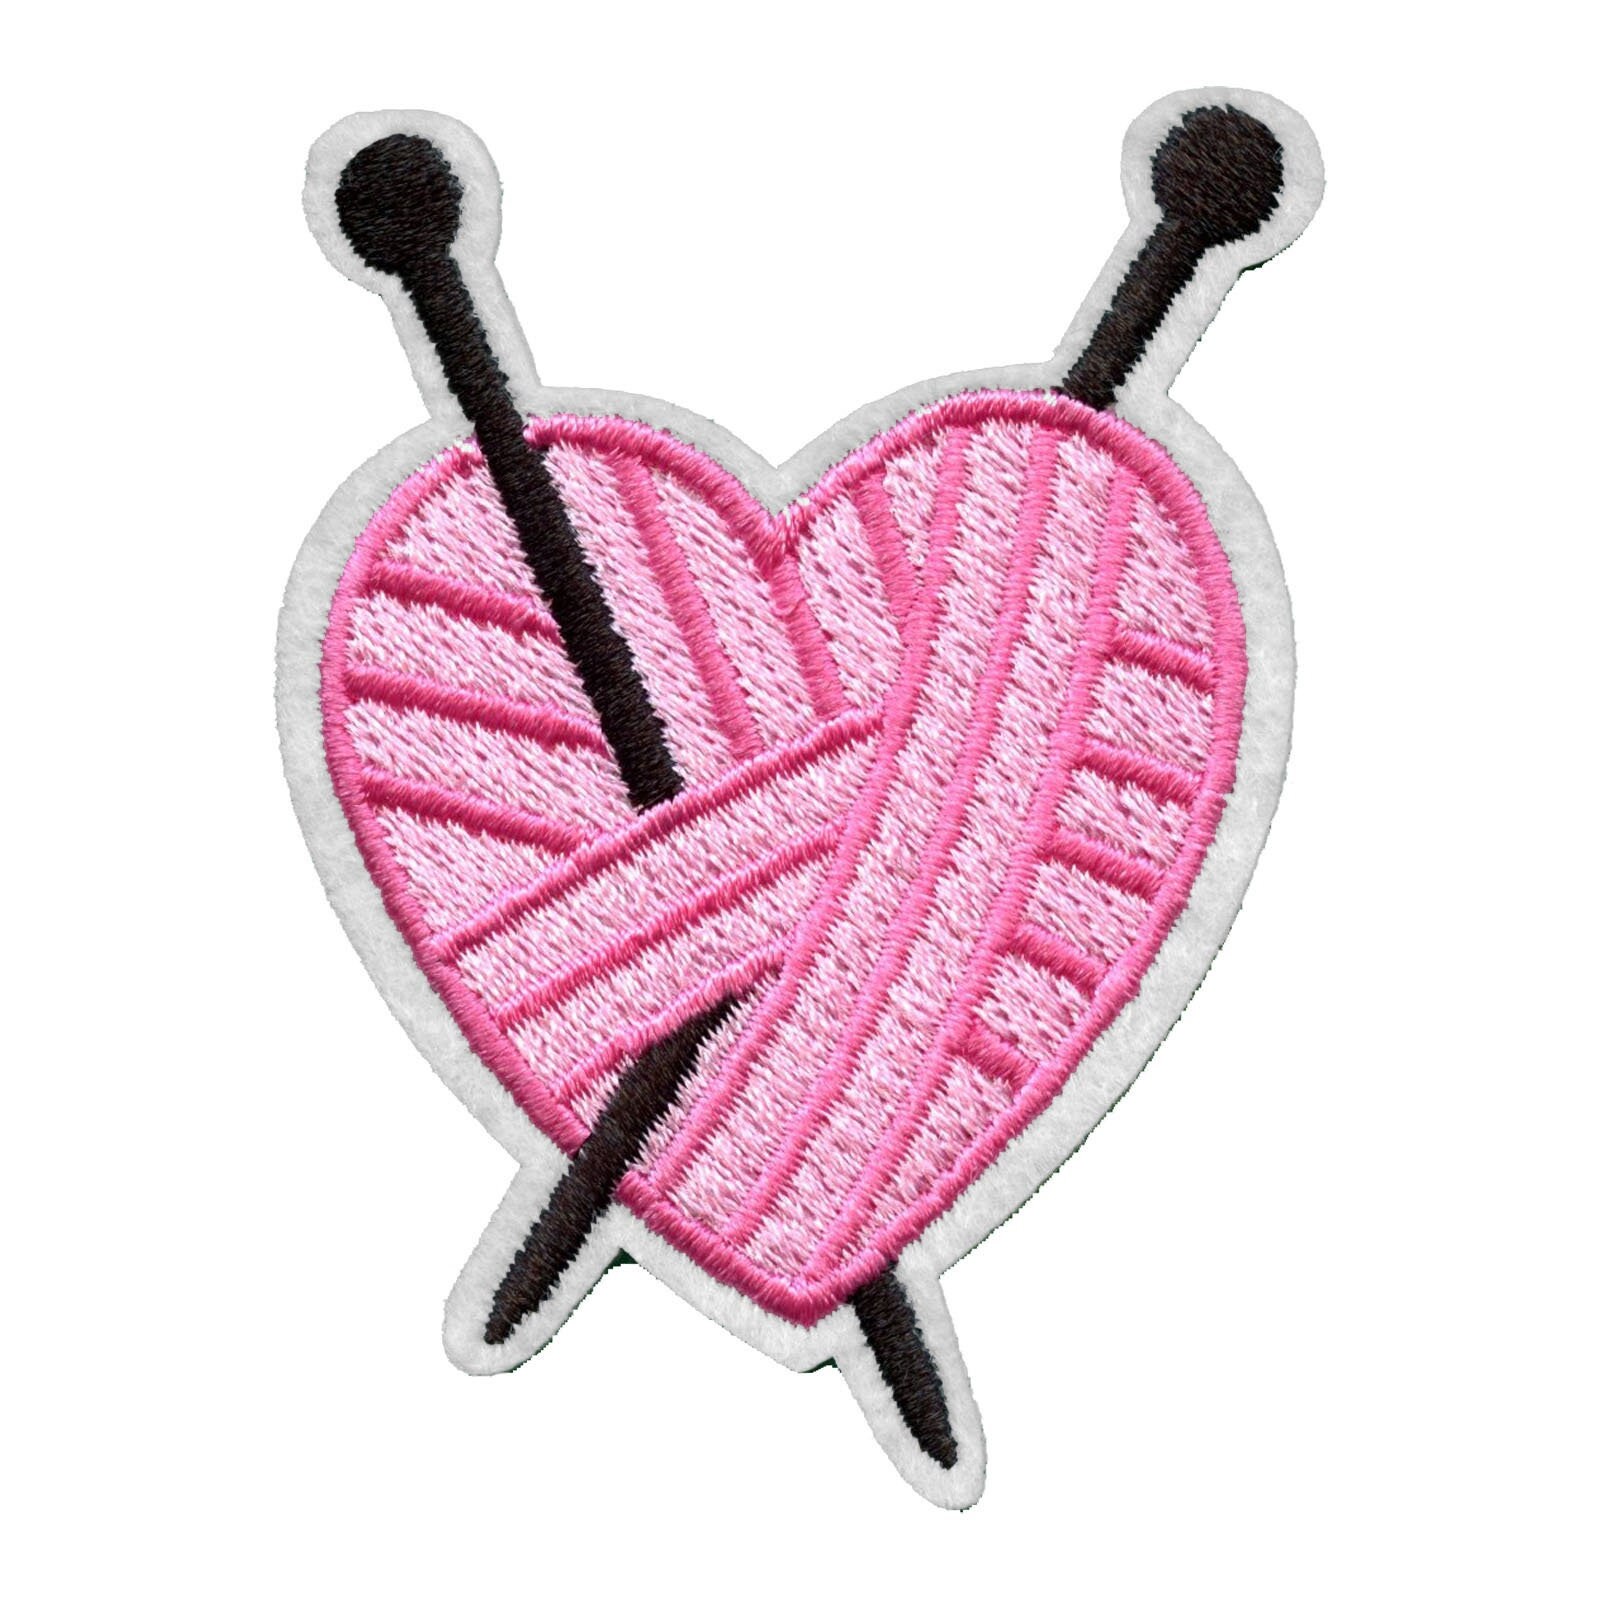 Louis Vuitton made heart logo badge machine embroidery design